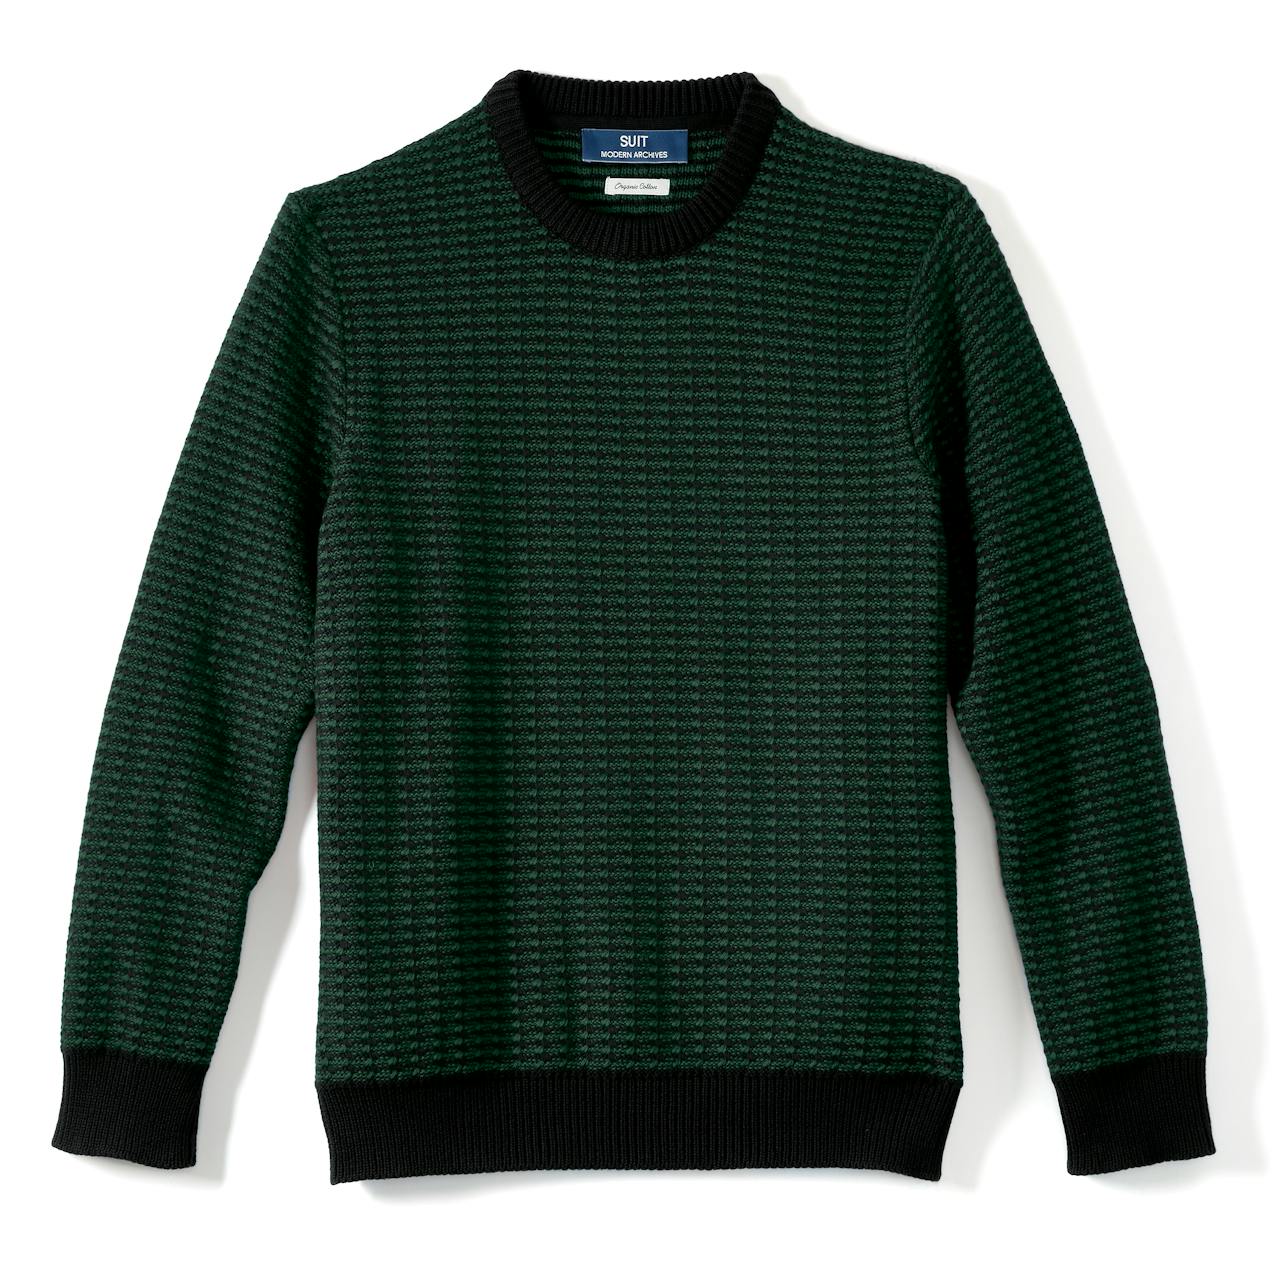 Suit Leo Sweater - Jet Black | Crew Neck Sweaters | Huckberry